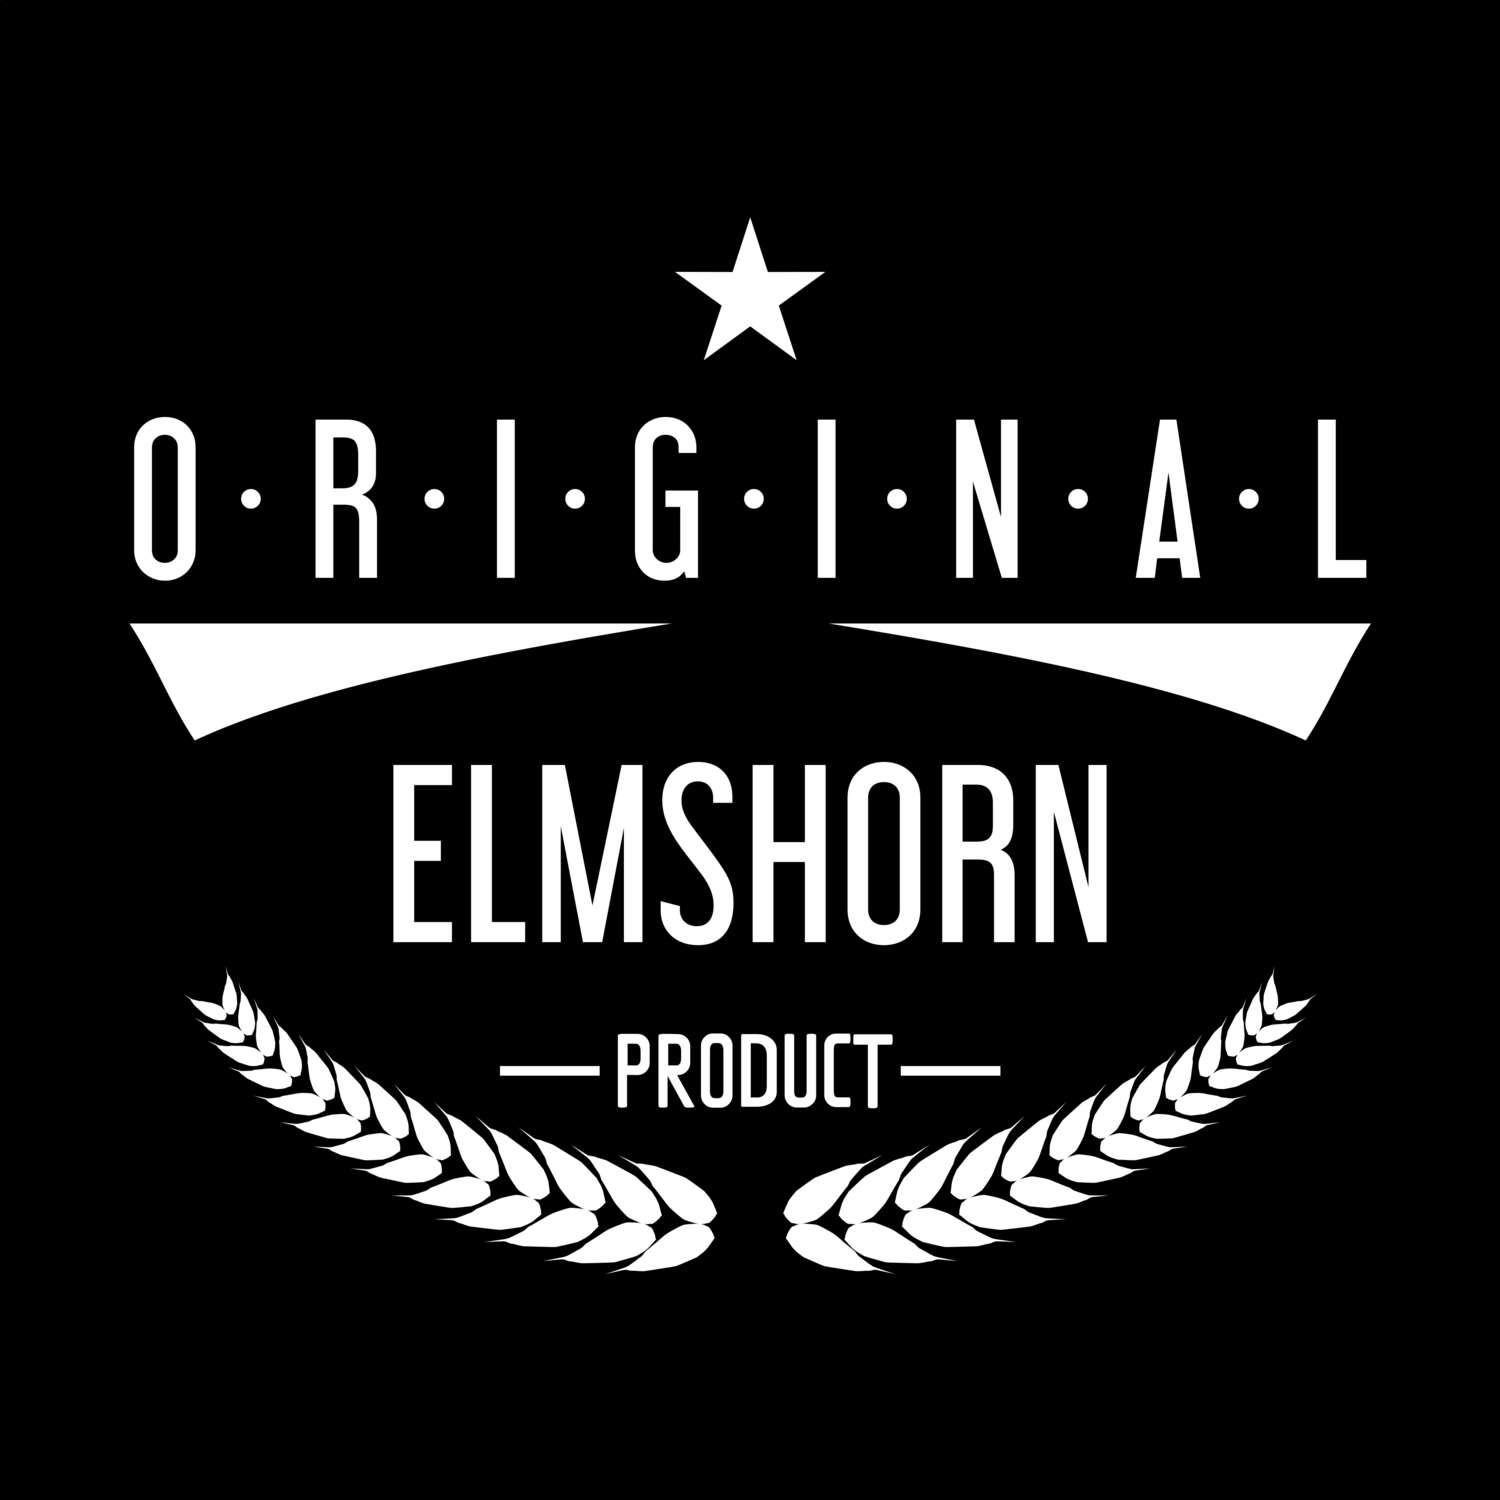 Elmshorn T-Shirt »Original Product«